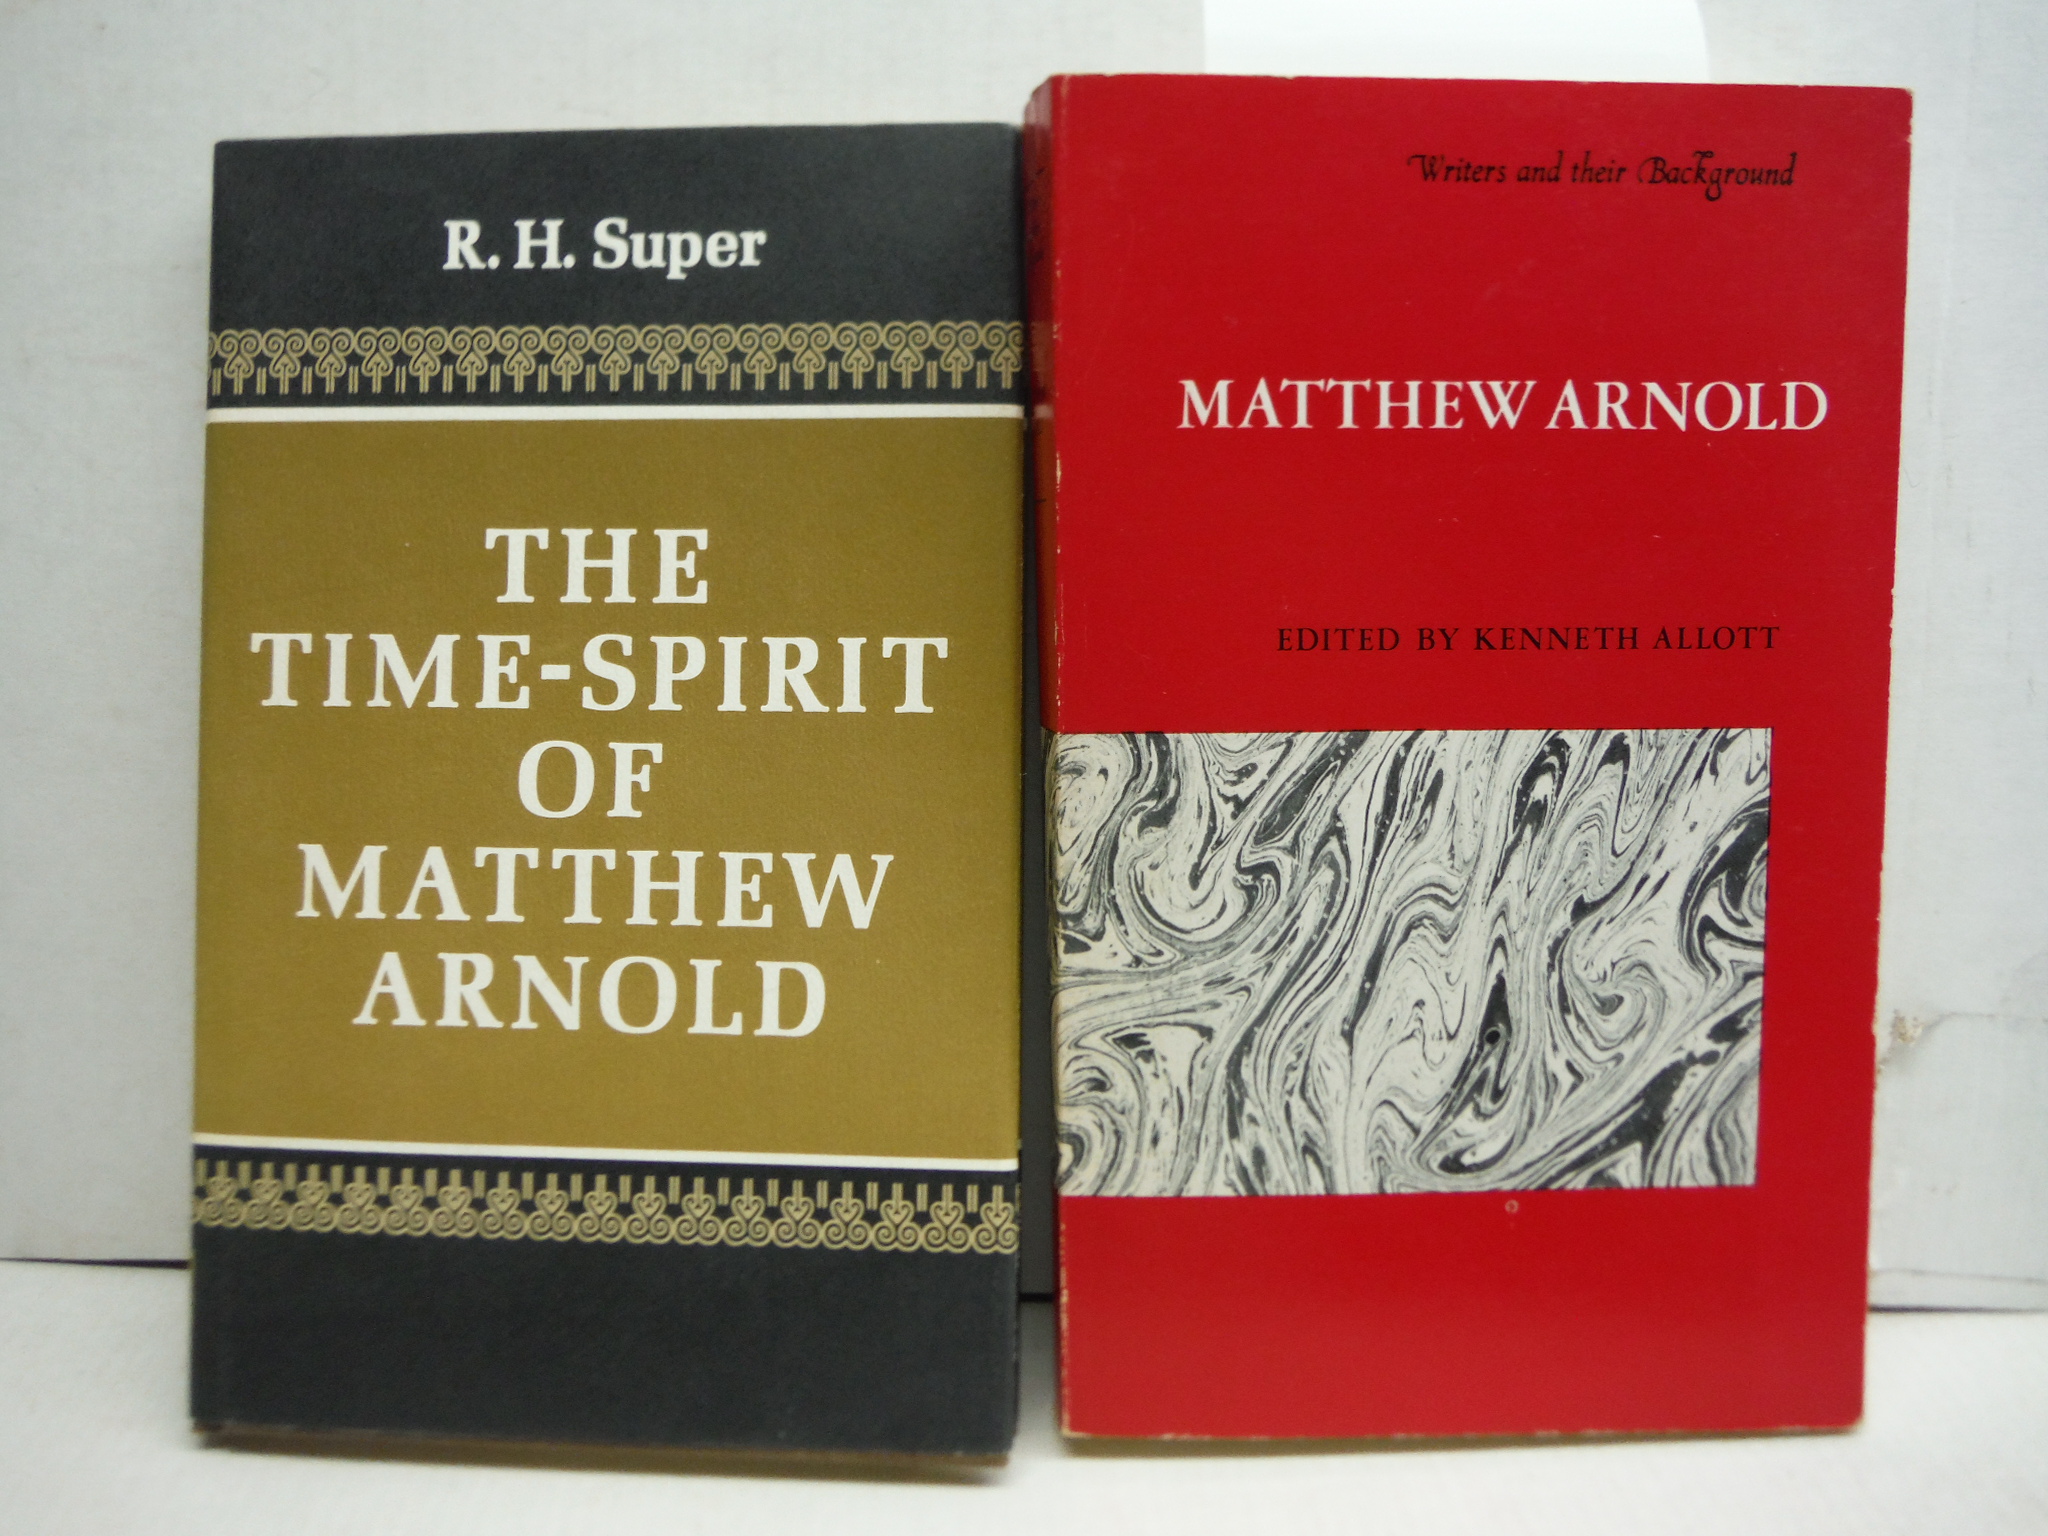 Lot of 2 books on Matthew Arnold